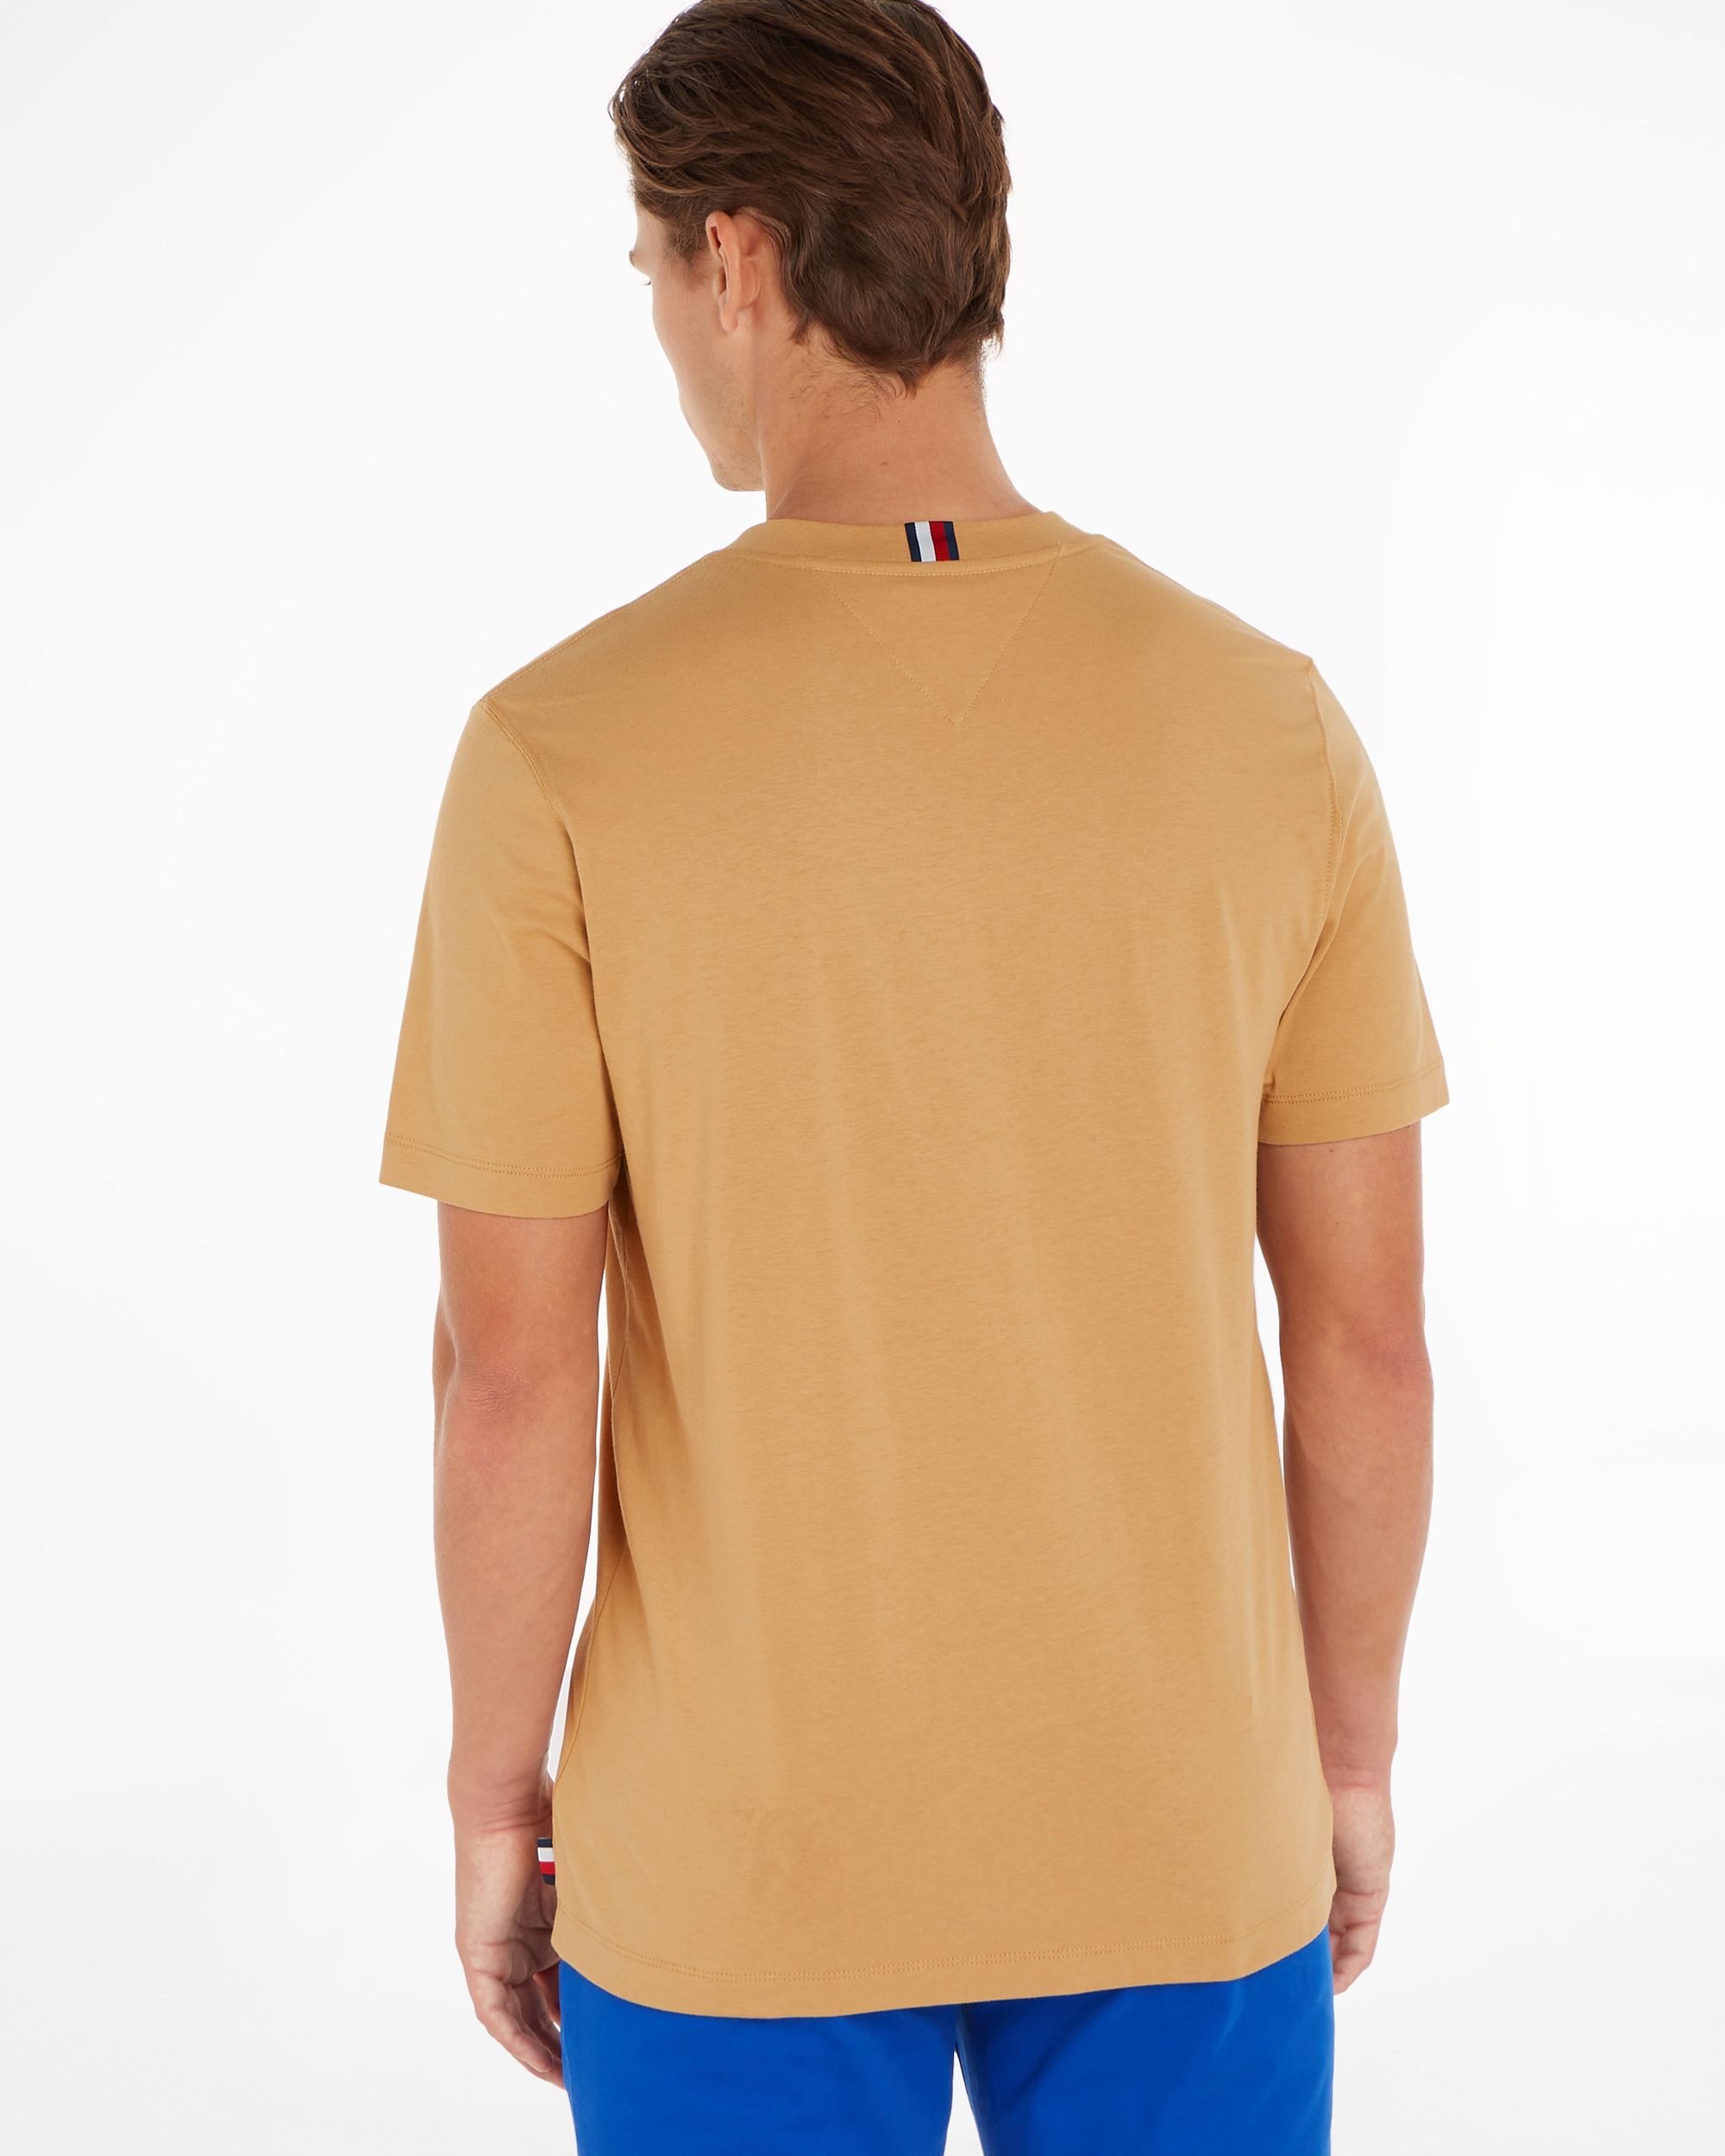 Tommy Hilfiger Menswear T-shirt KM Donker geel 089127-001-L